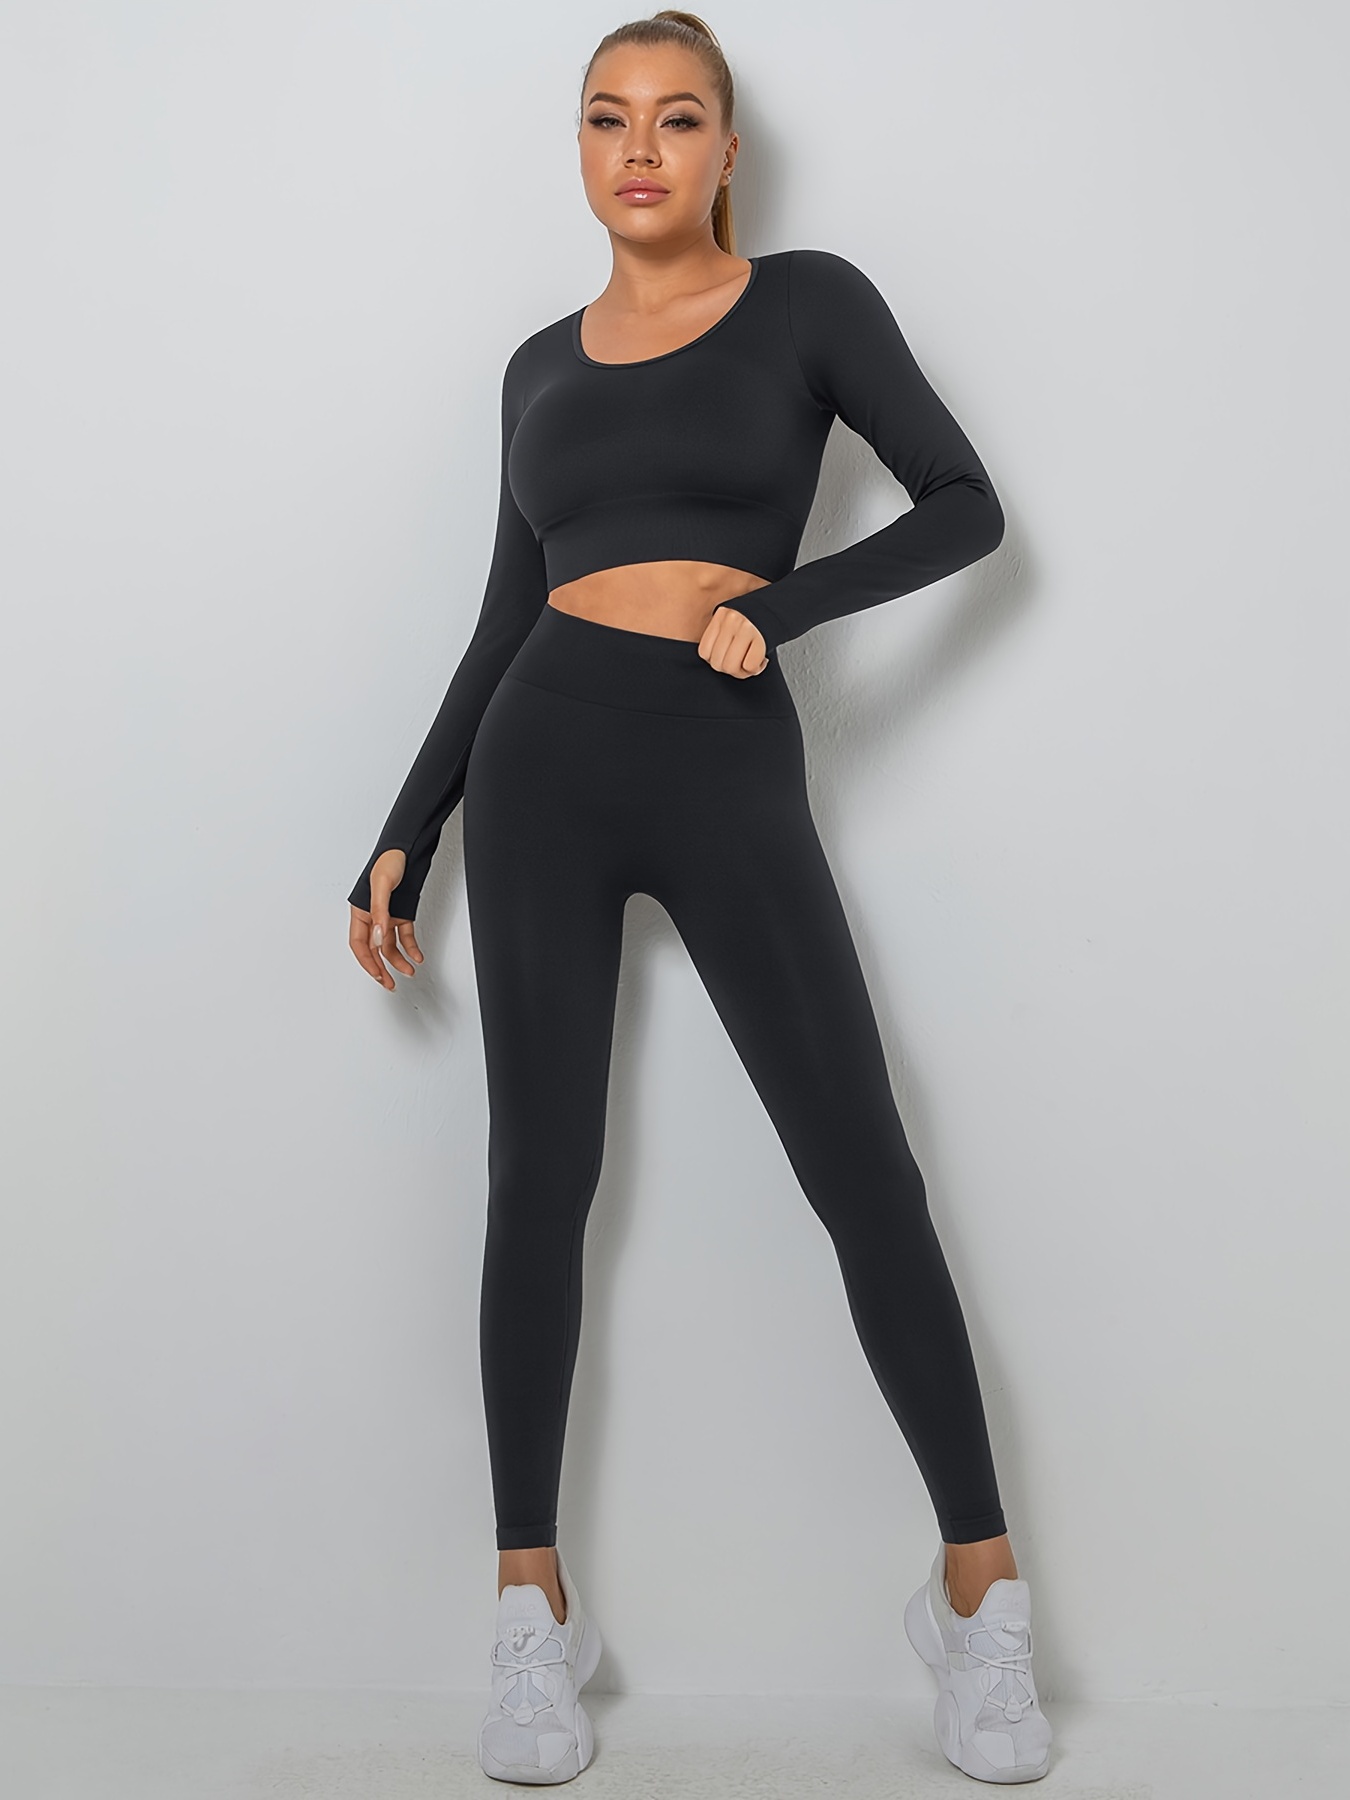 Womens Seamless 2pcs Yoga Set Yoga Suit Crop Top+Leggings Pants Sport Gym  Outfit 